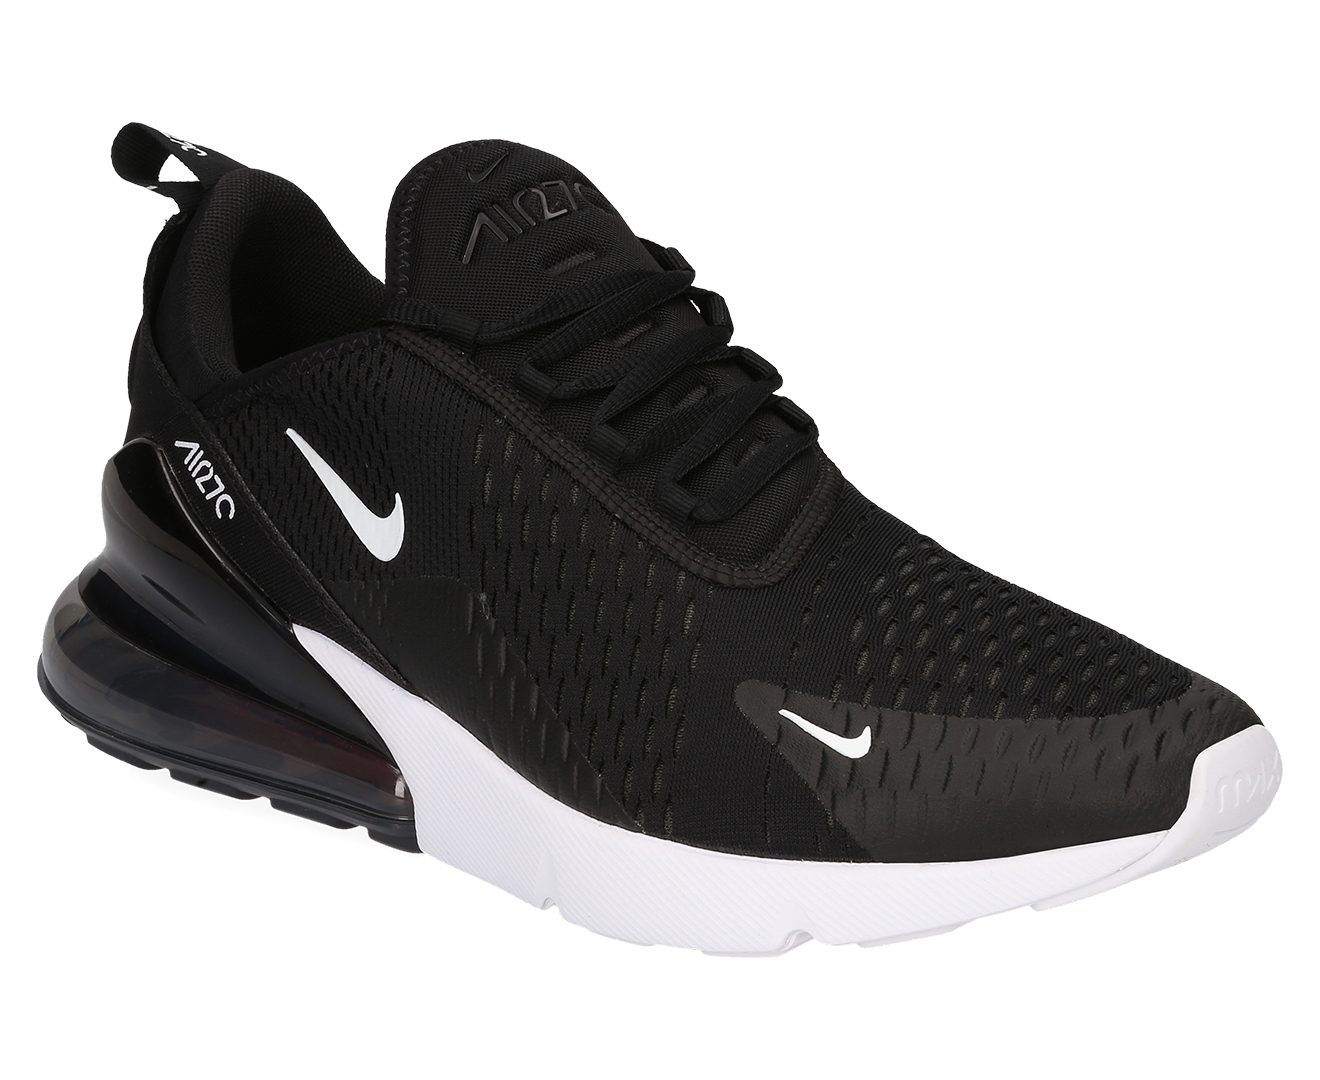 Nike Men's Air Max 270 Shoe - Black/Anthracite-White | Catch.com.au